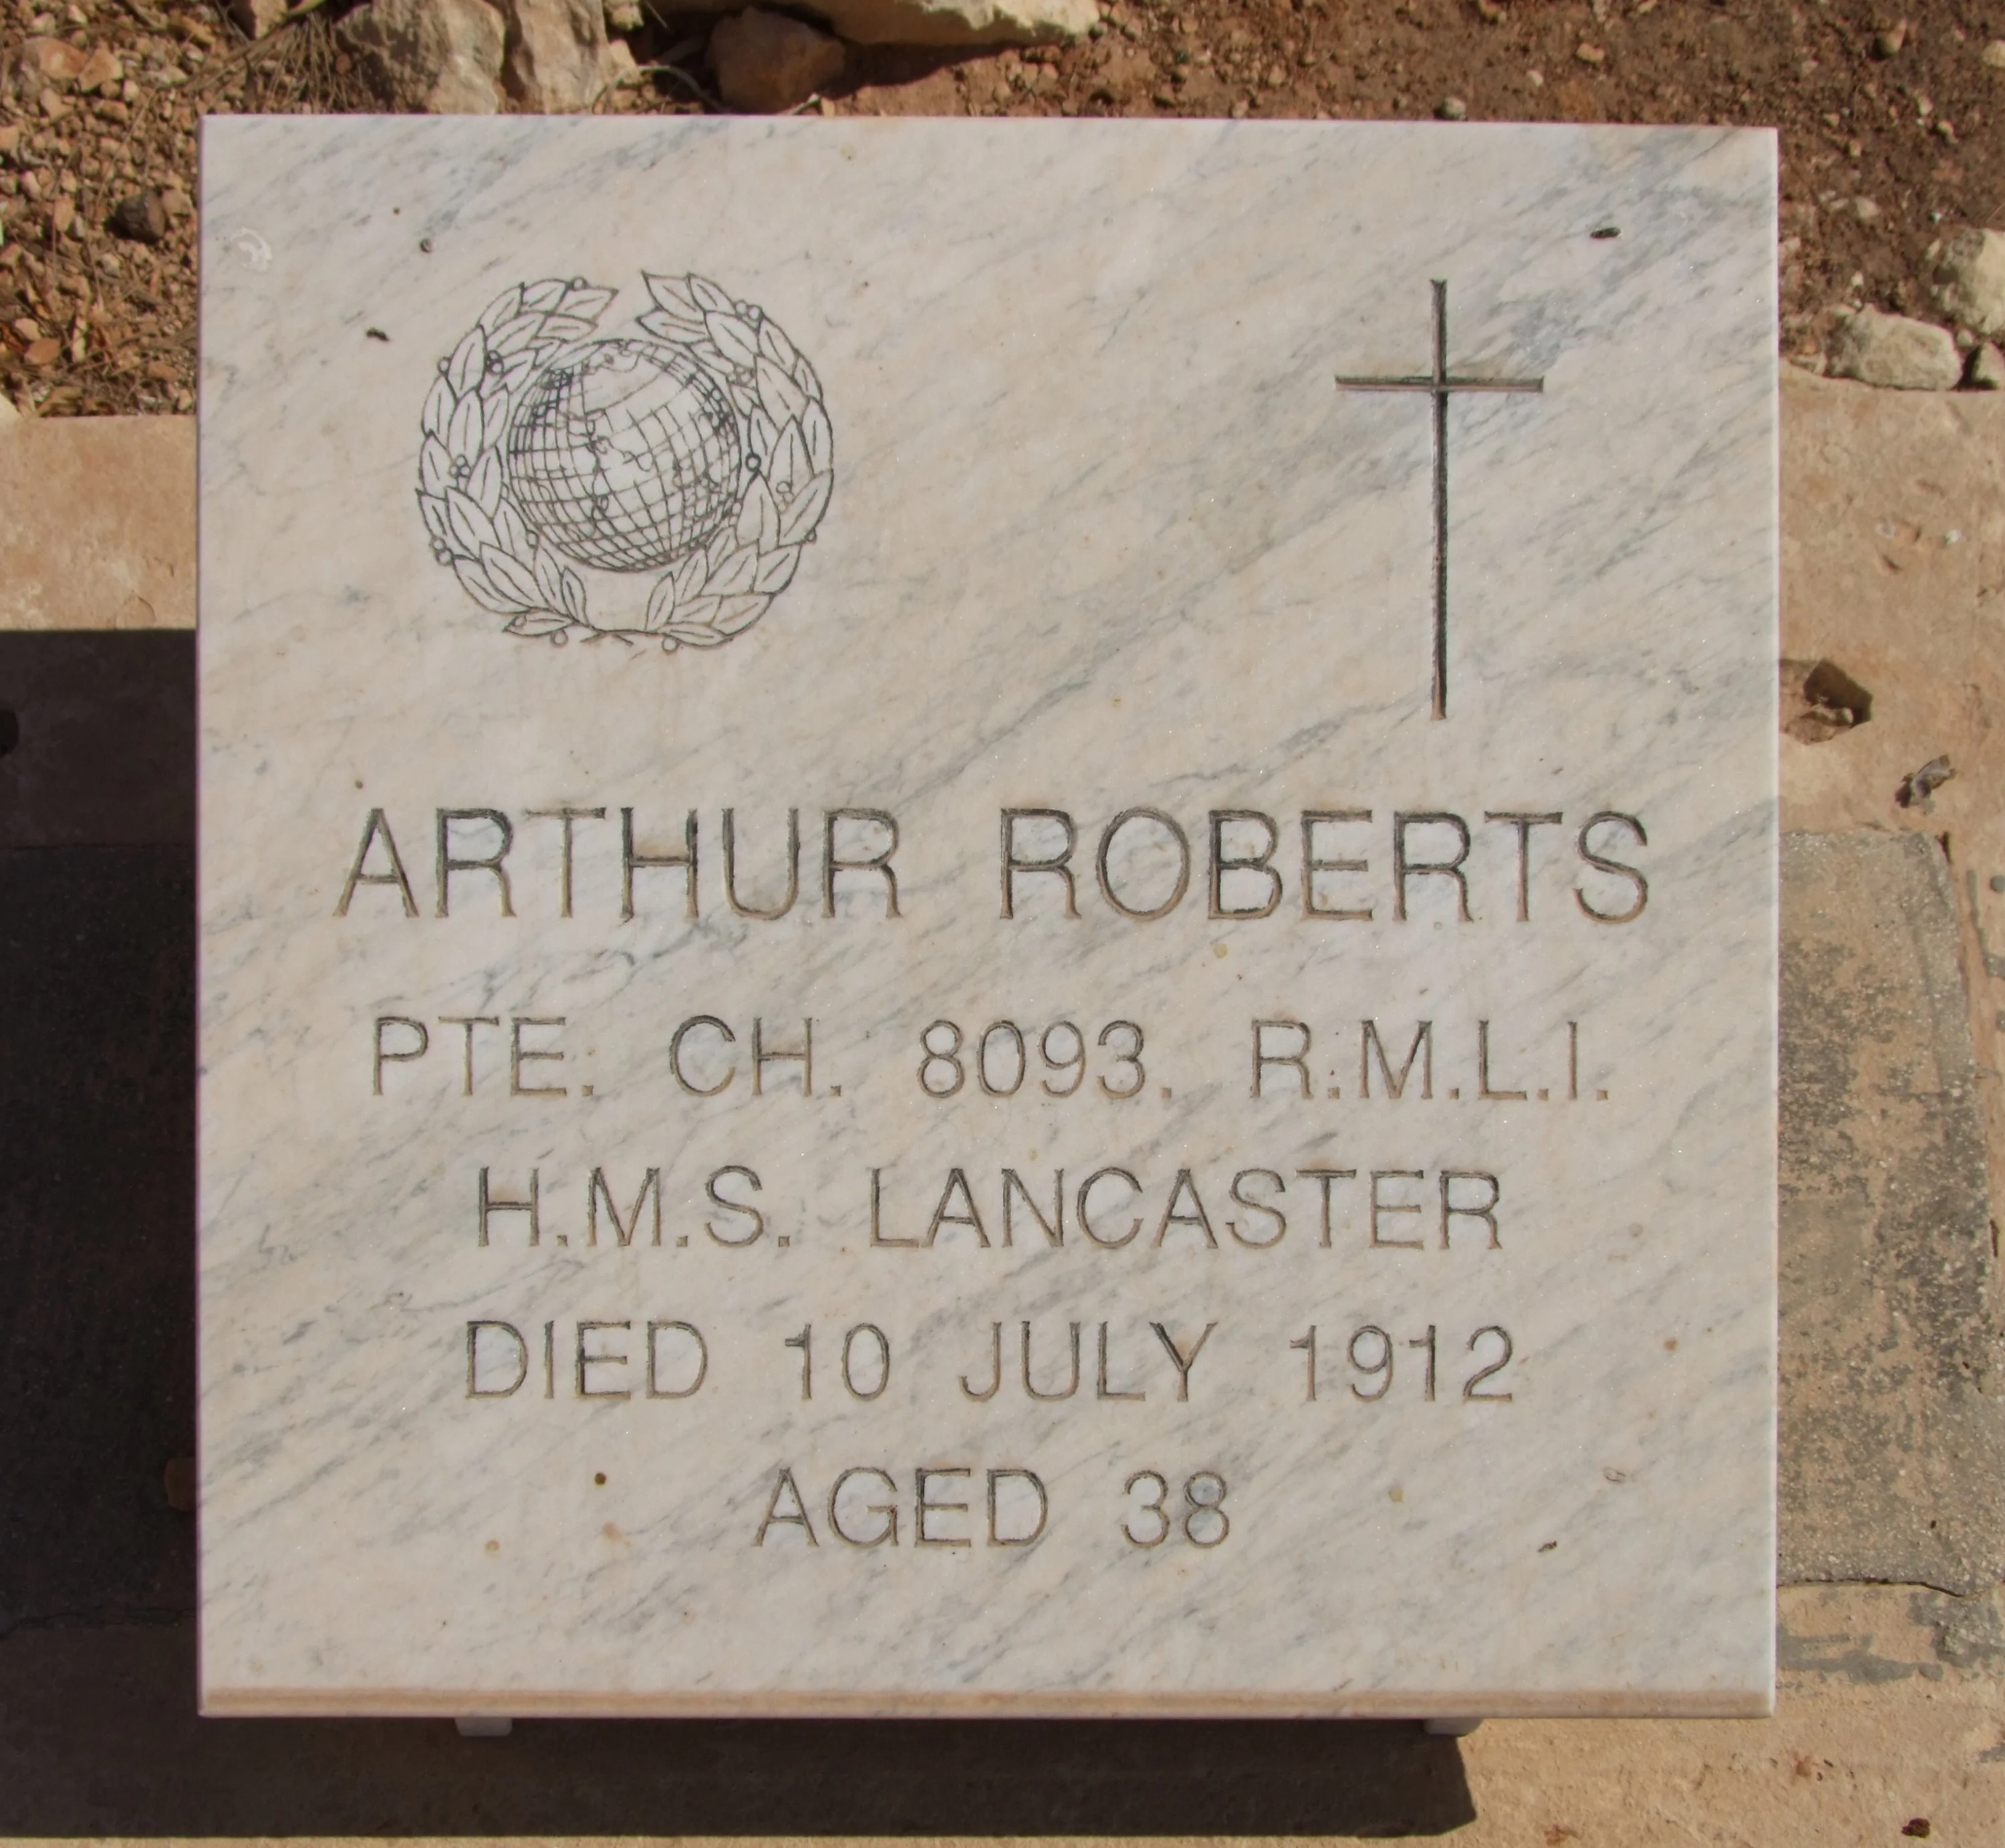 Arthur ROBERTS